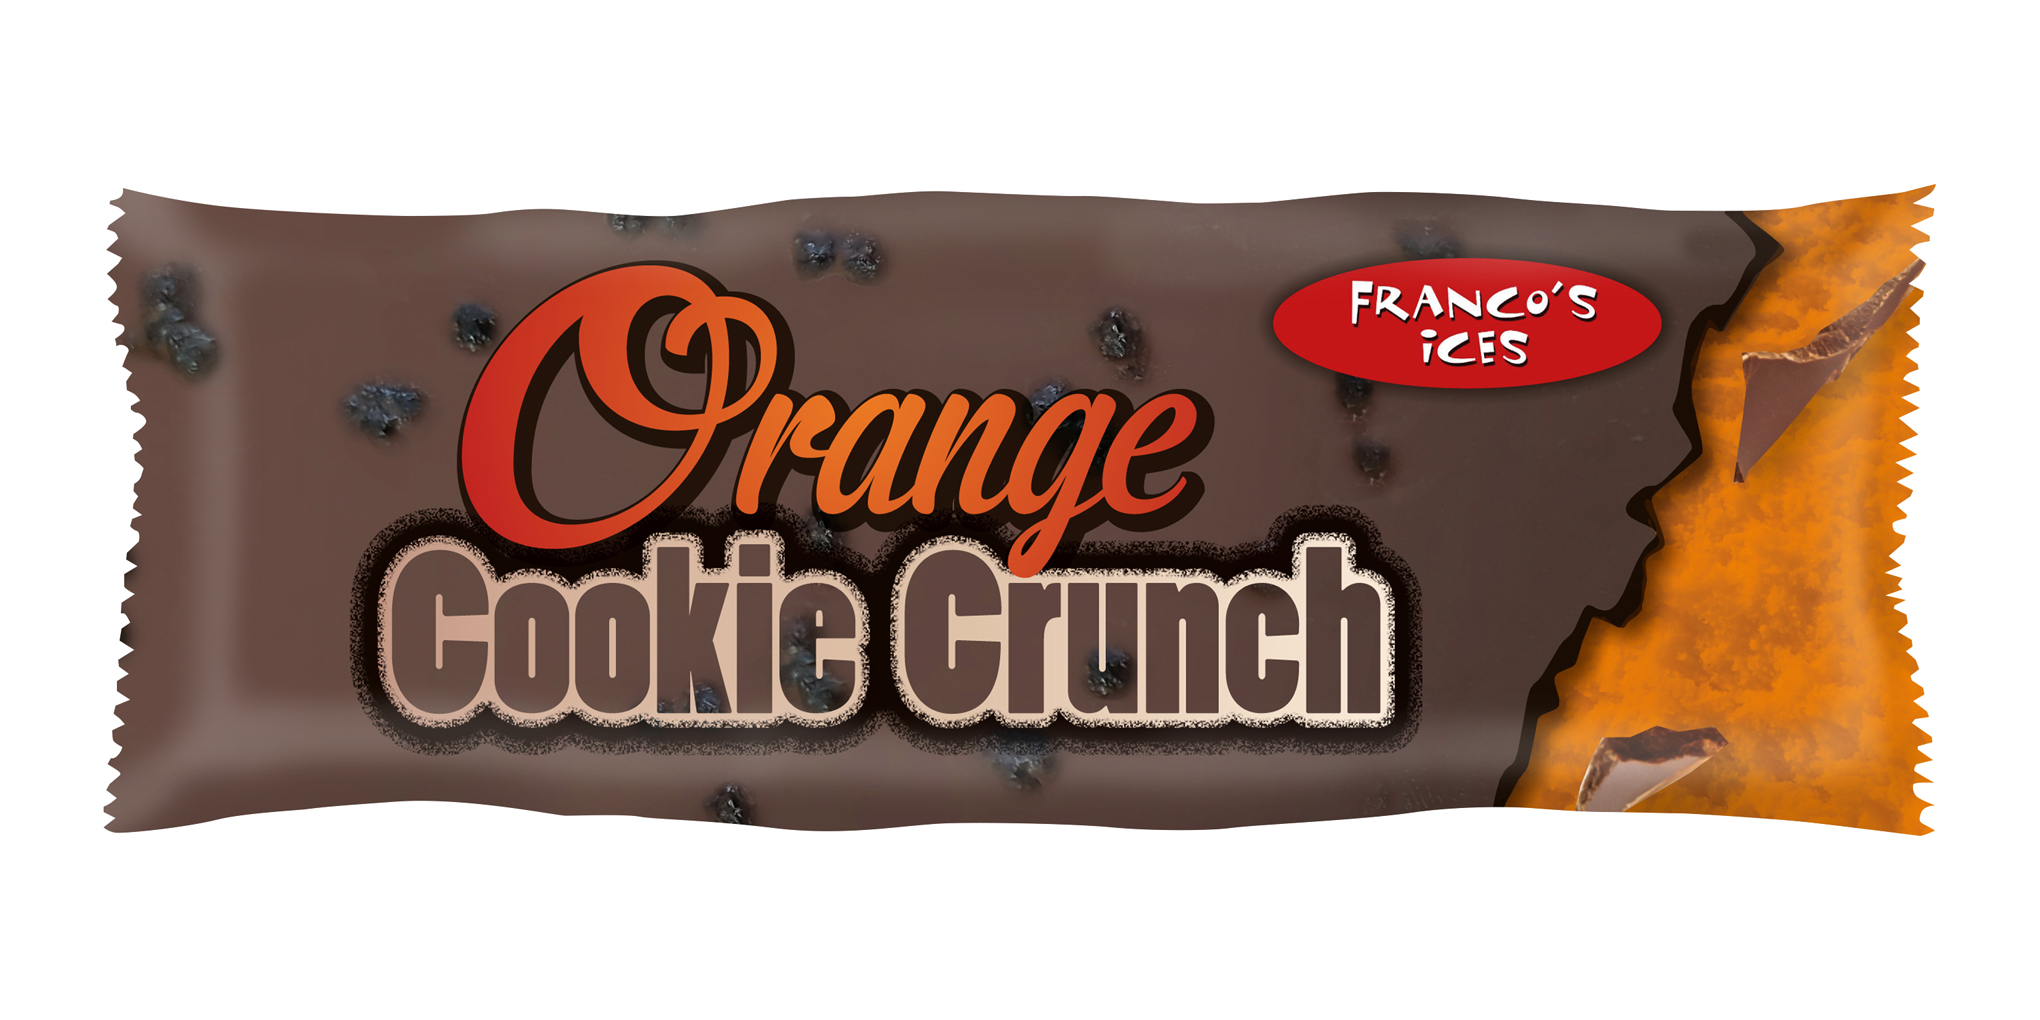 NEW Wrapper Design for Orange Cookie Crunch. Roll on summer!